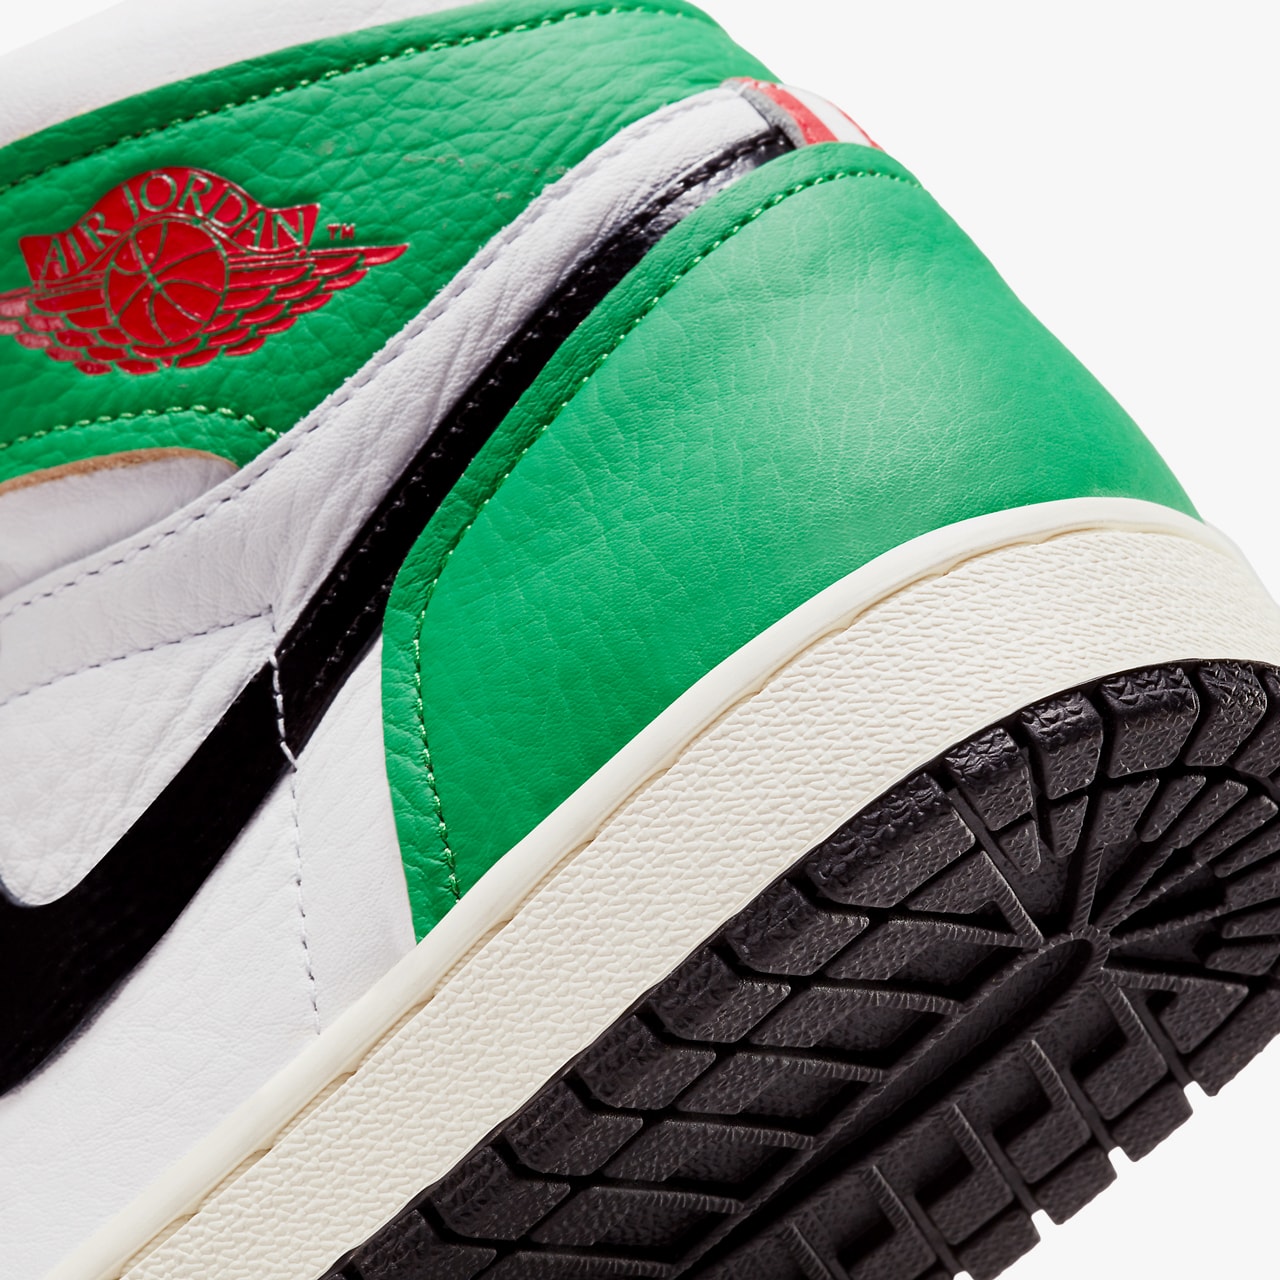 Nike Air Jordan 1 High "Lucky Green"